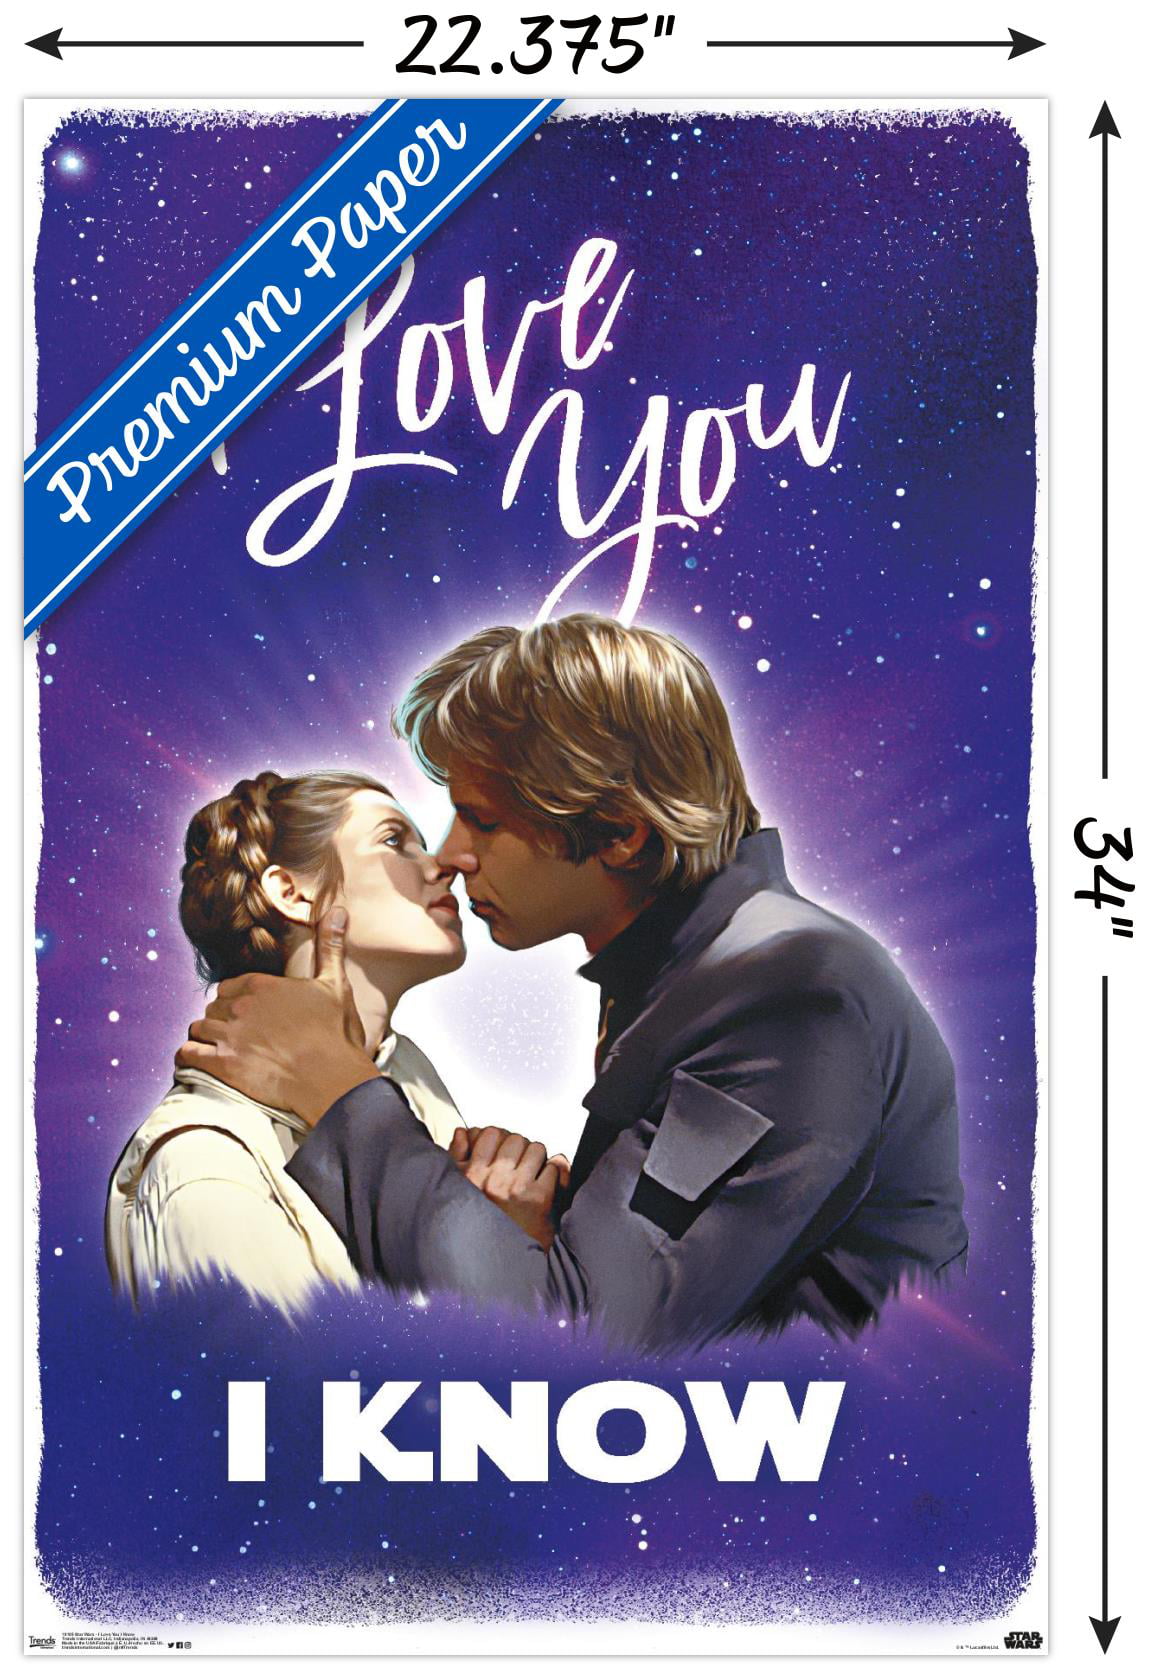 Star Wars: Saga - I Love You I Know Wall Poster, 22.375